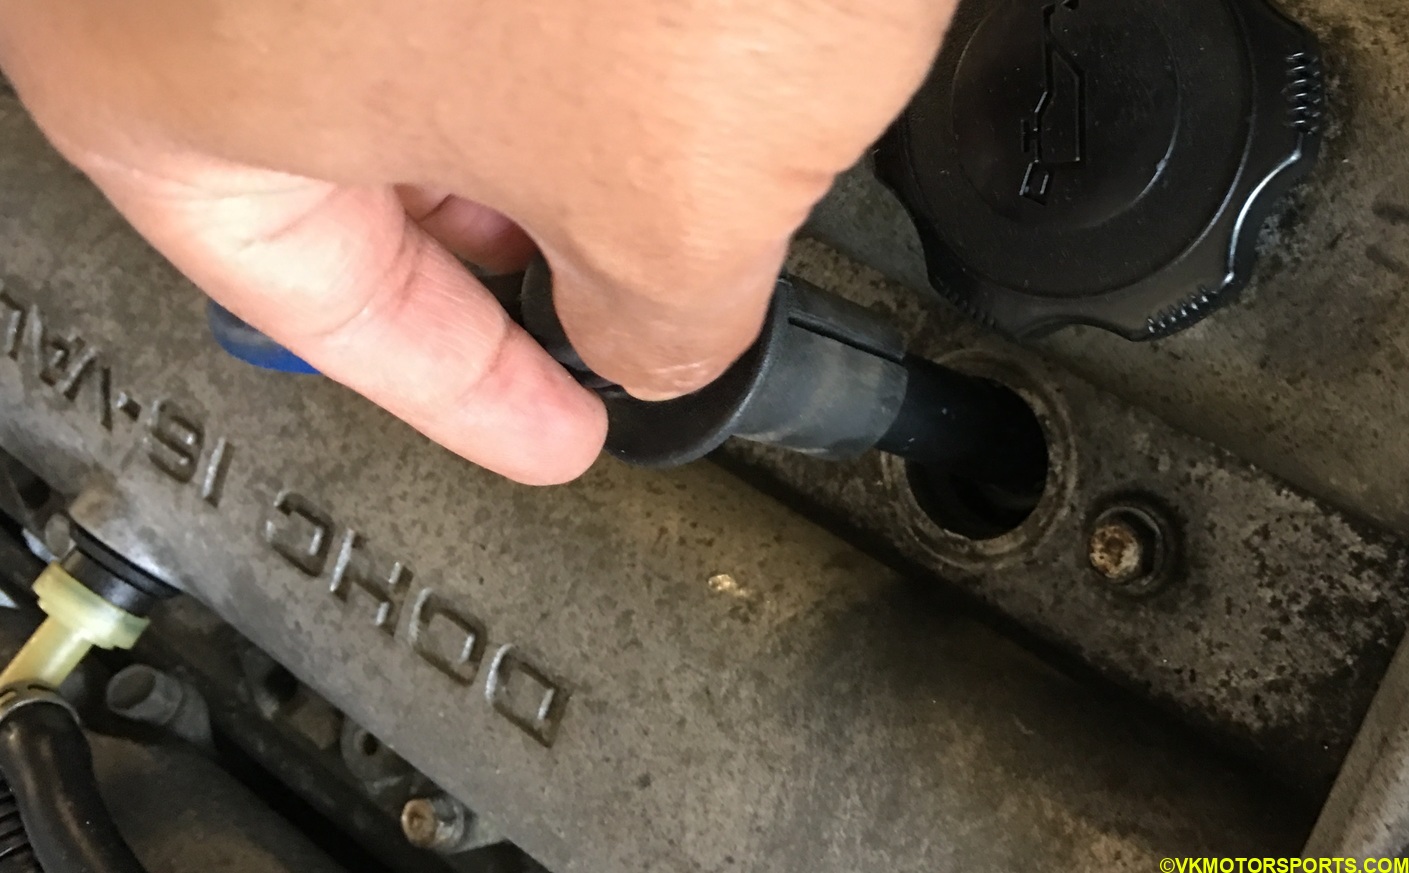 remove the spark plug boot